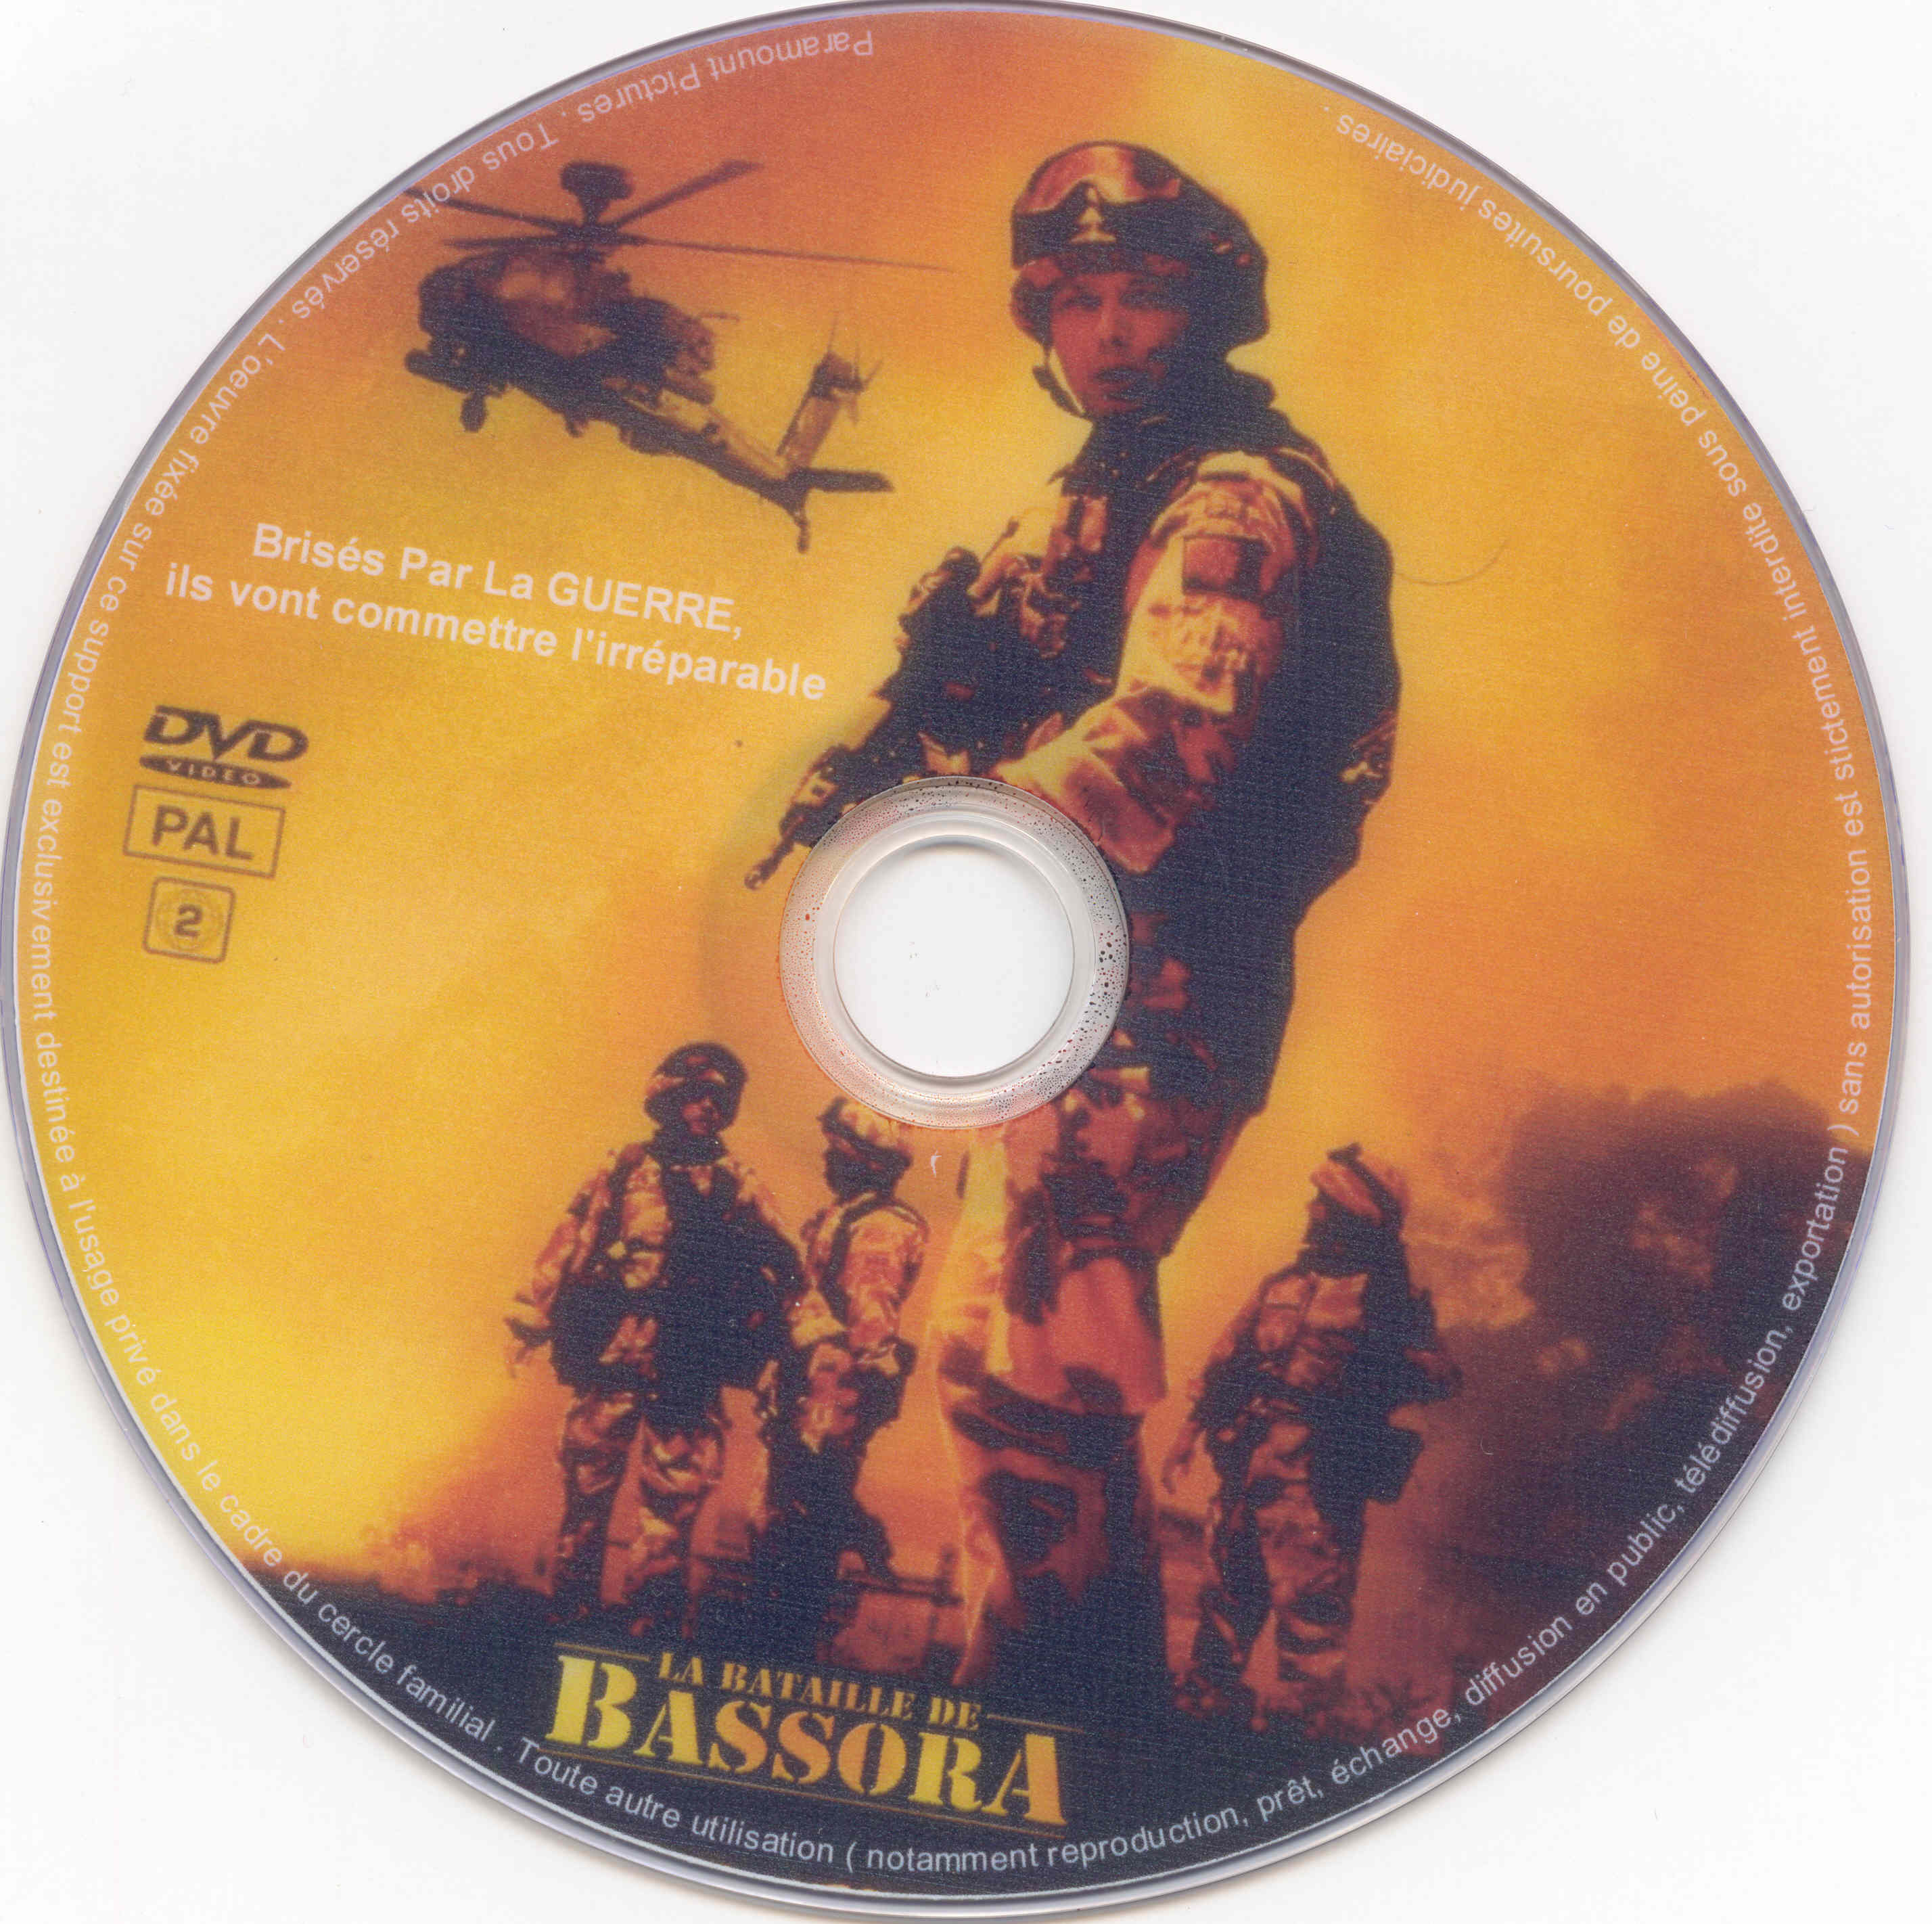 La bataille de Bassora